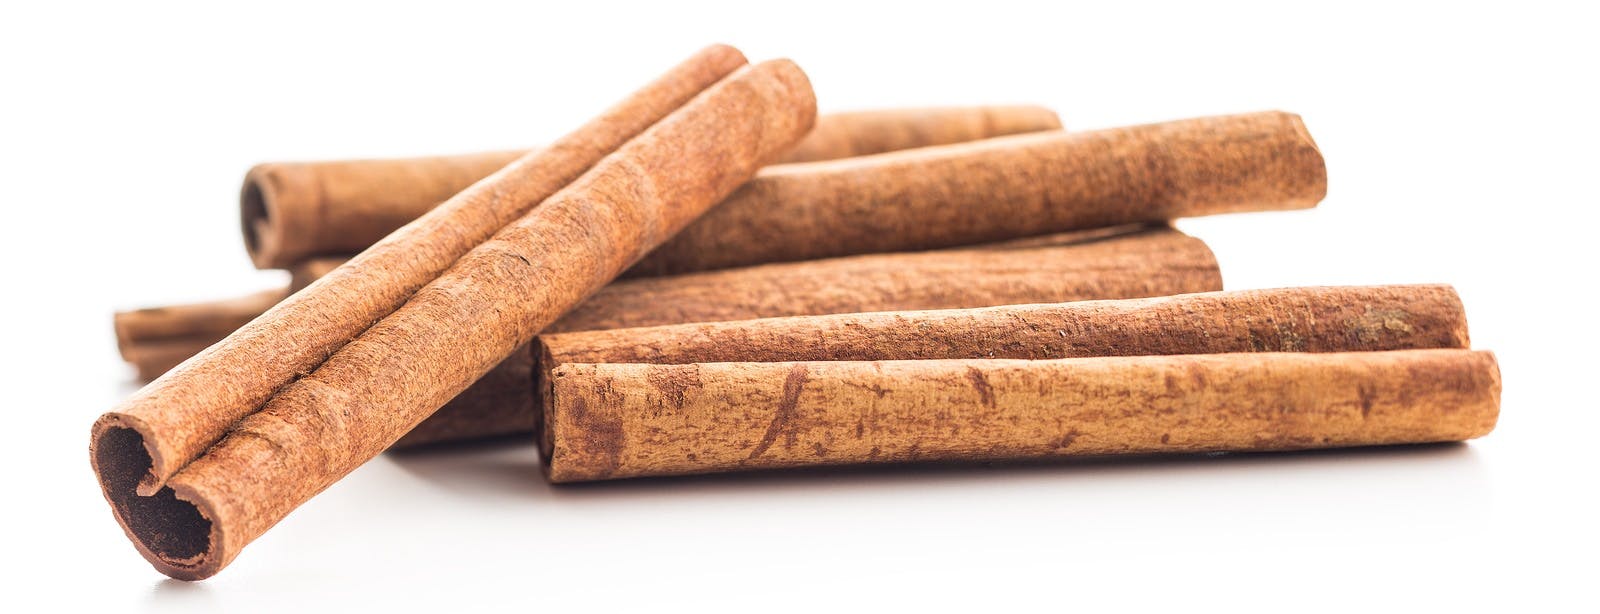 Cinnamon sticks; cinnamon may reverse prediabetes